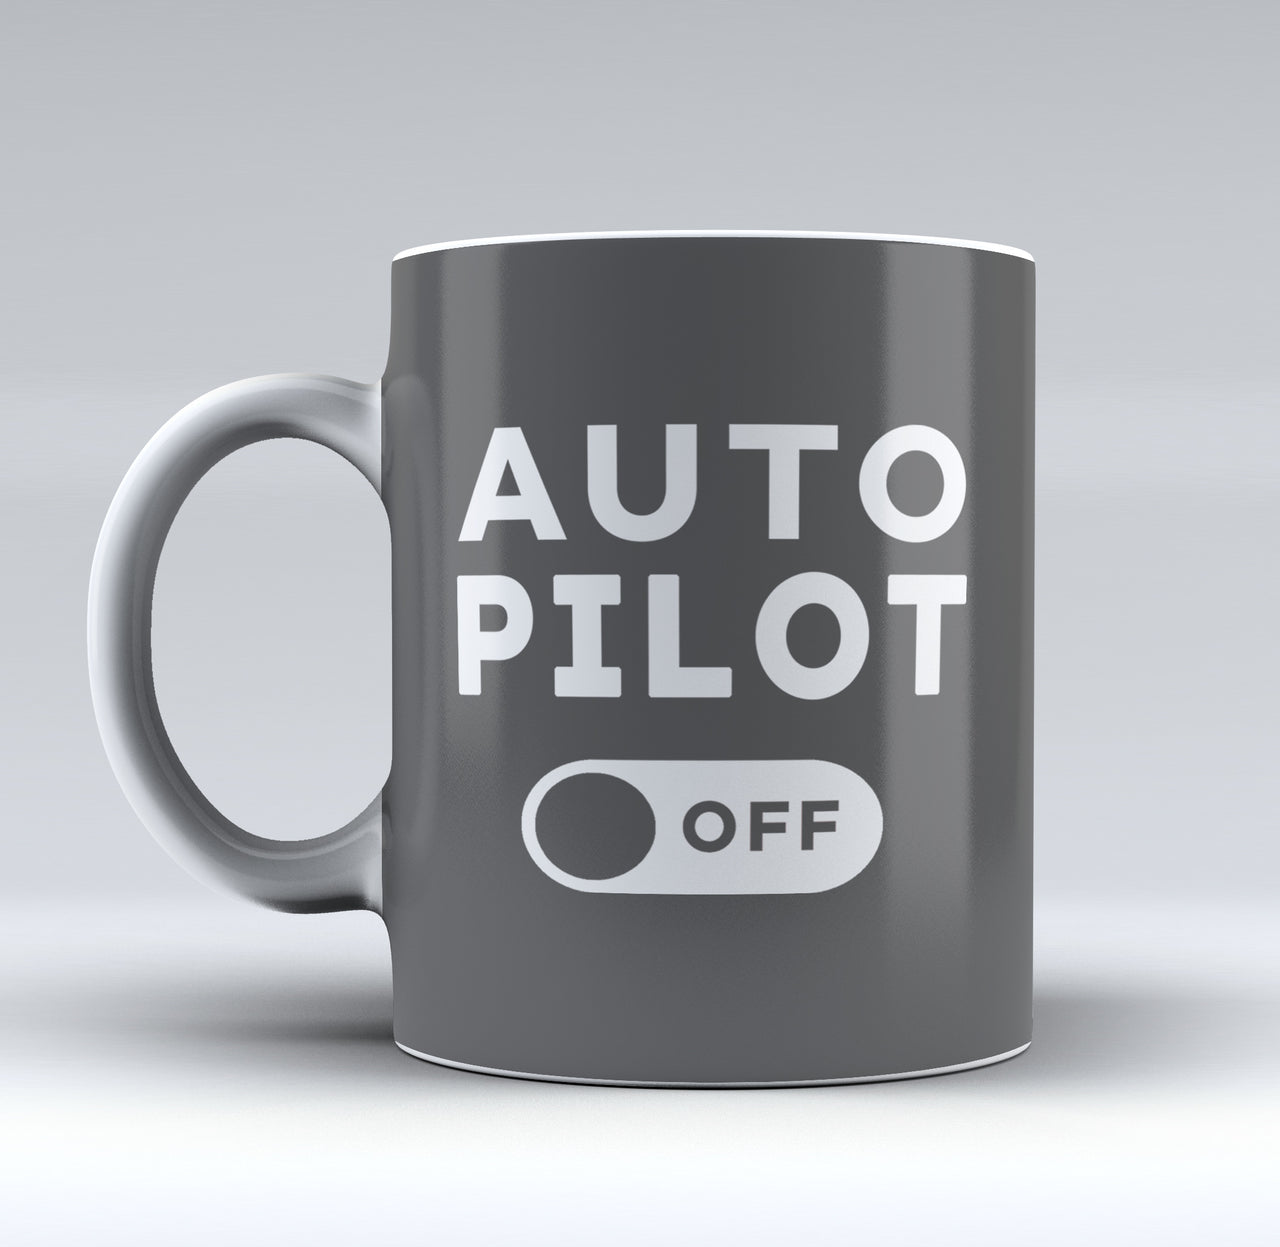 Auto Pilot Off Designed Mugs